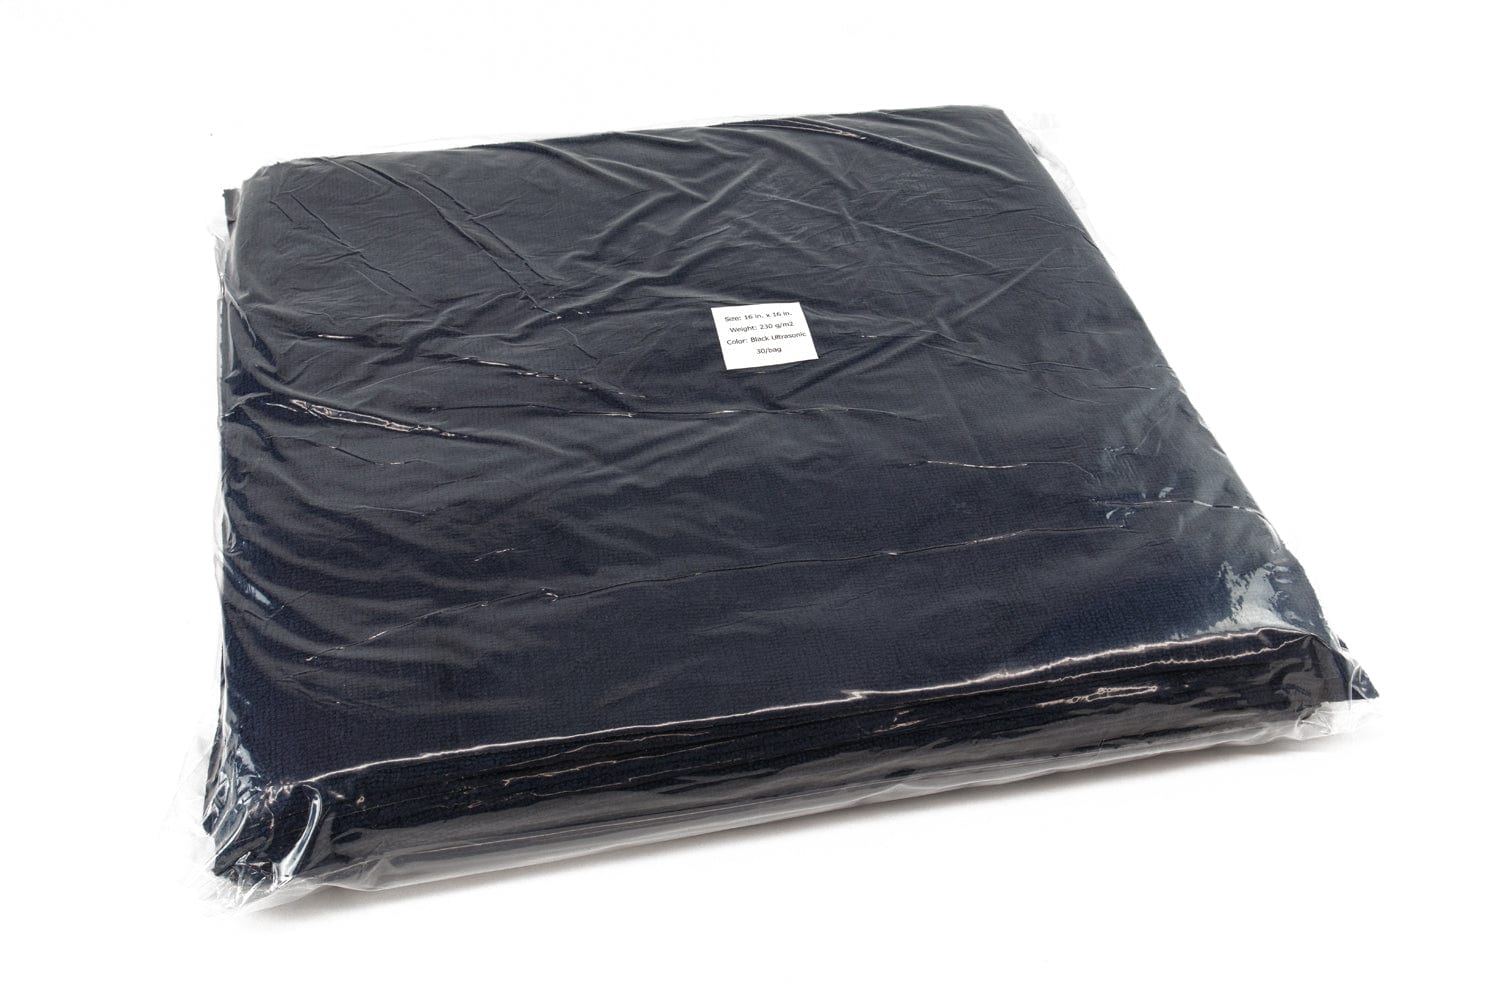 Autofiber Bulk Towel FULL CASE [Utility 230v] Lightweight Edgeless Microfiber Cleaning Towel 16"x16" - Vacuum Packed 30/bag - 300/case